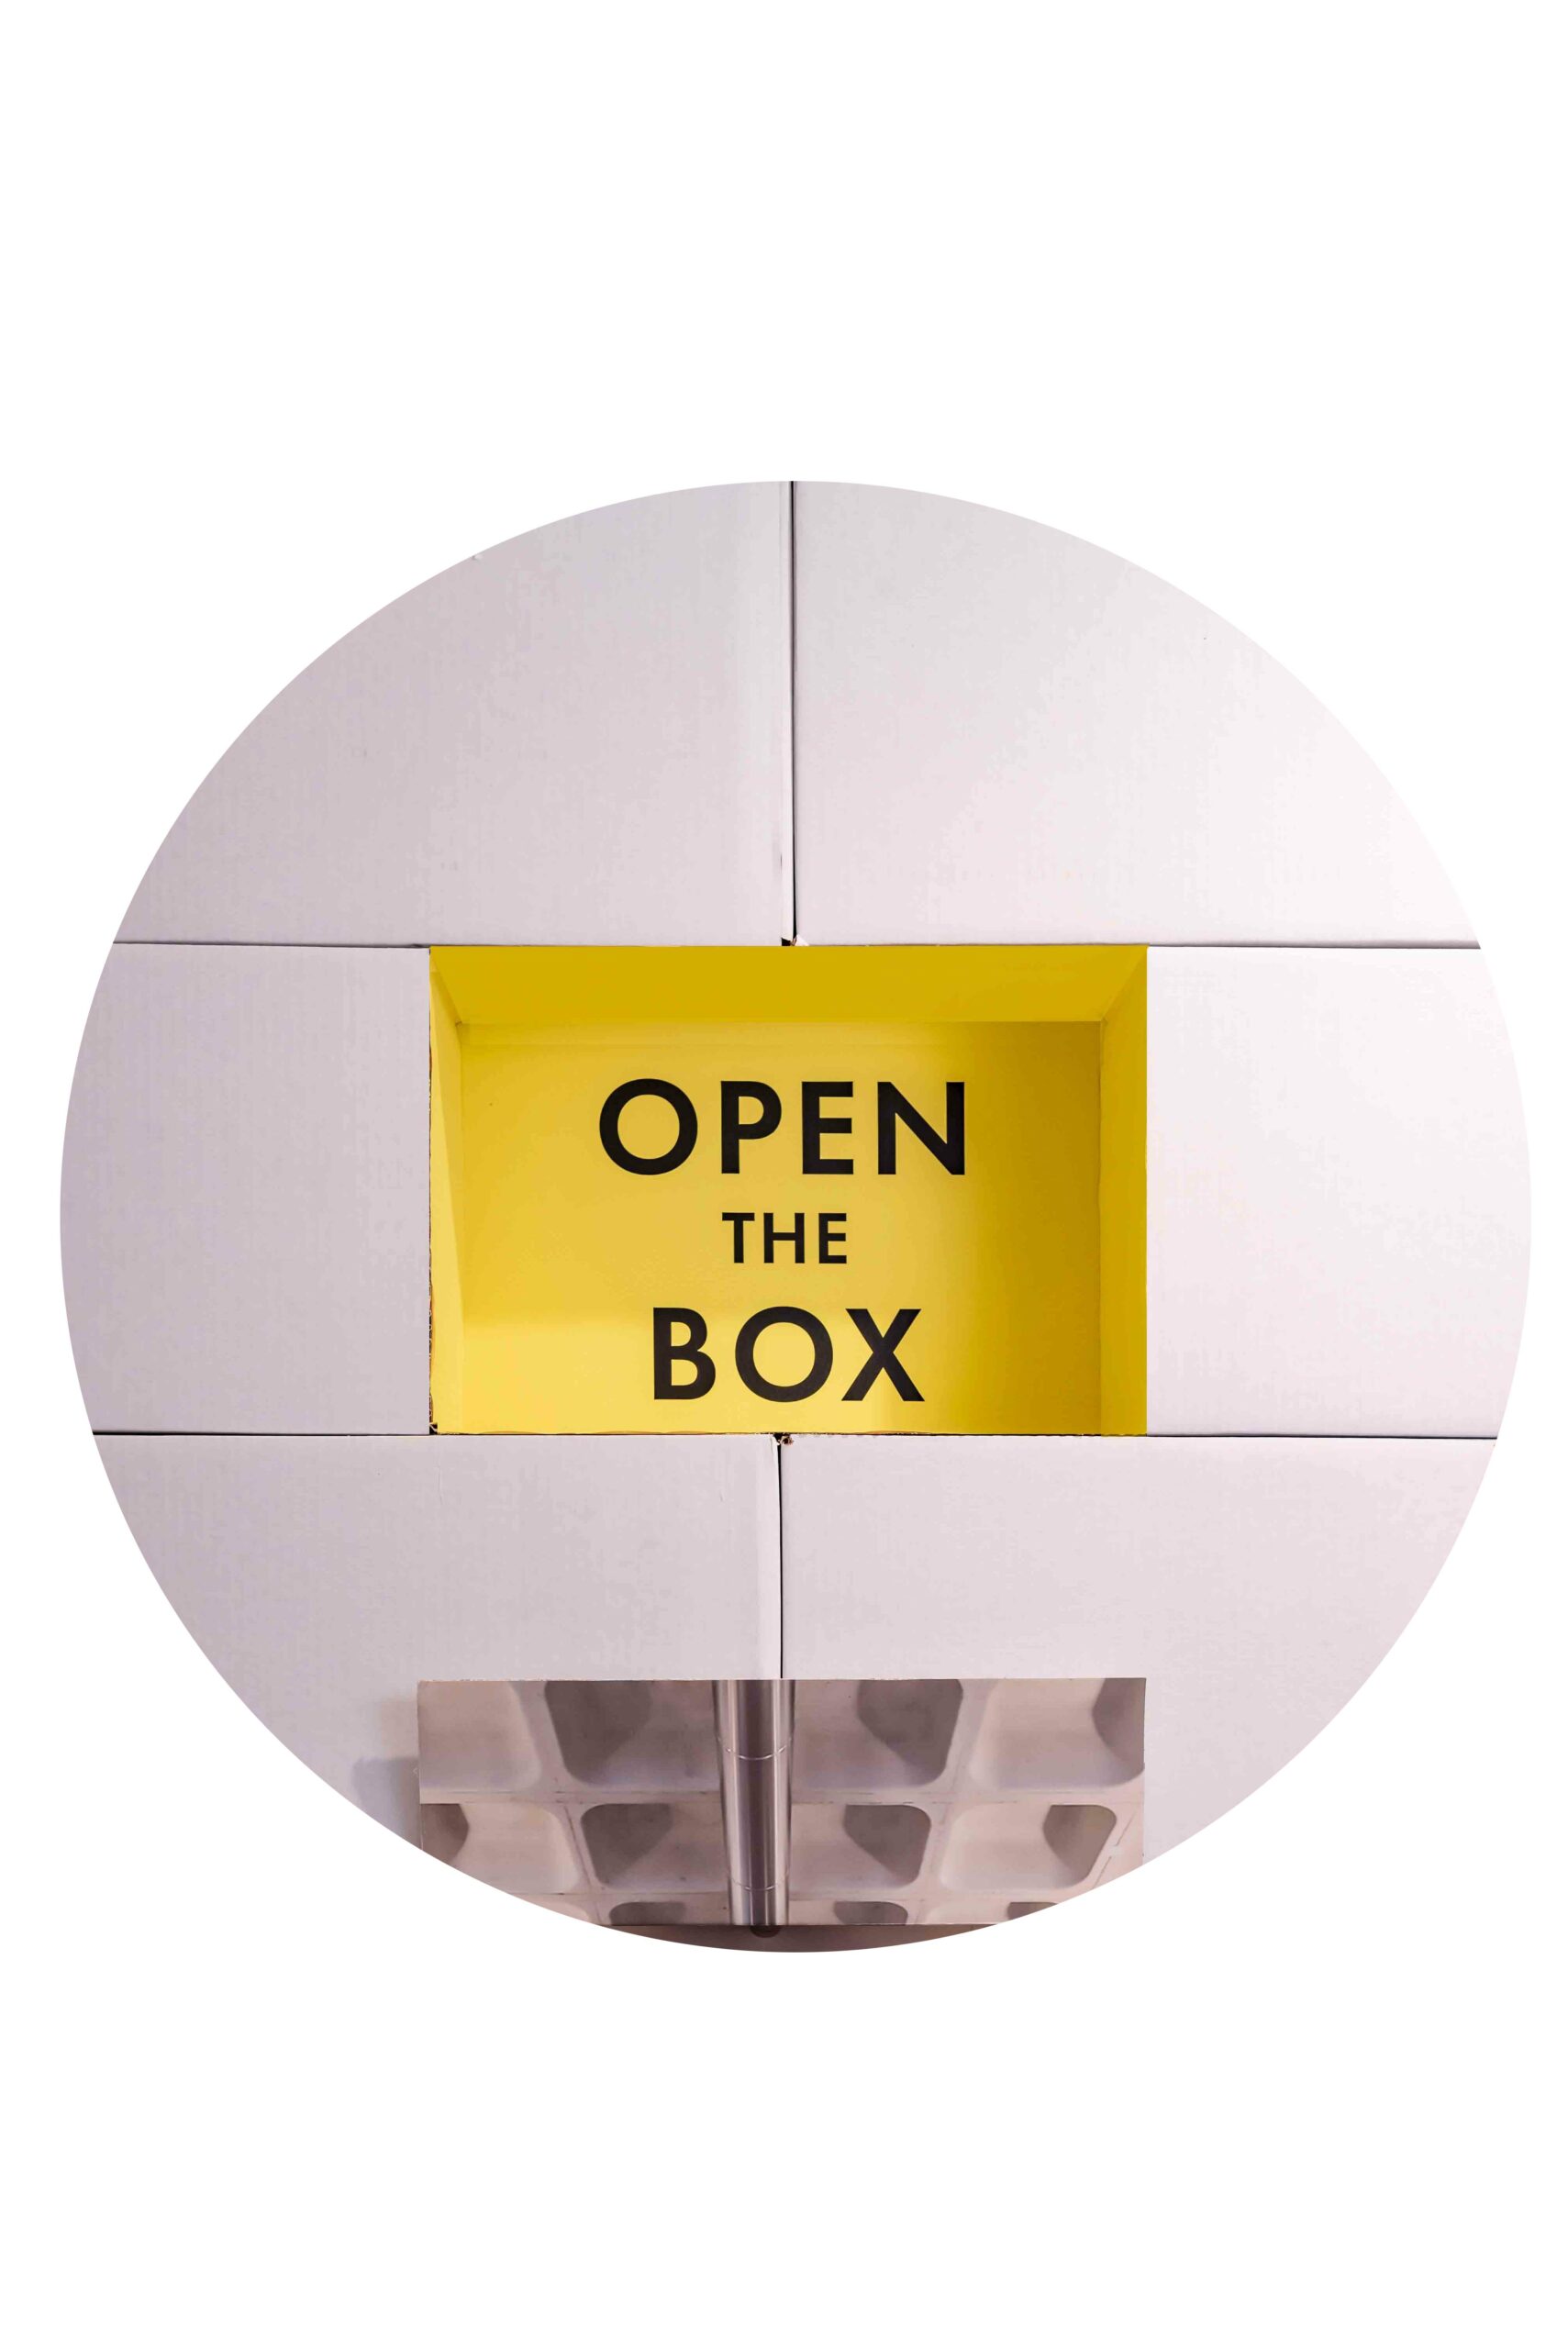 Open the Box Venice Biennale